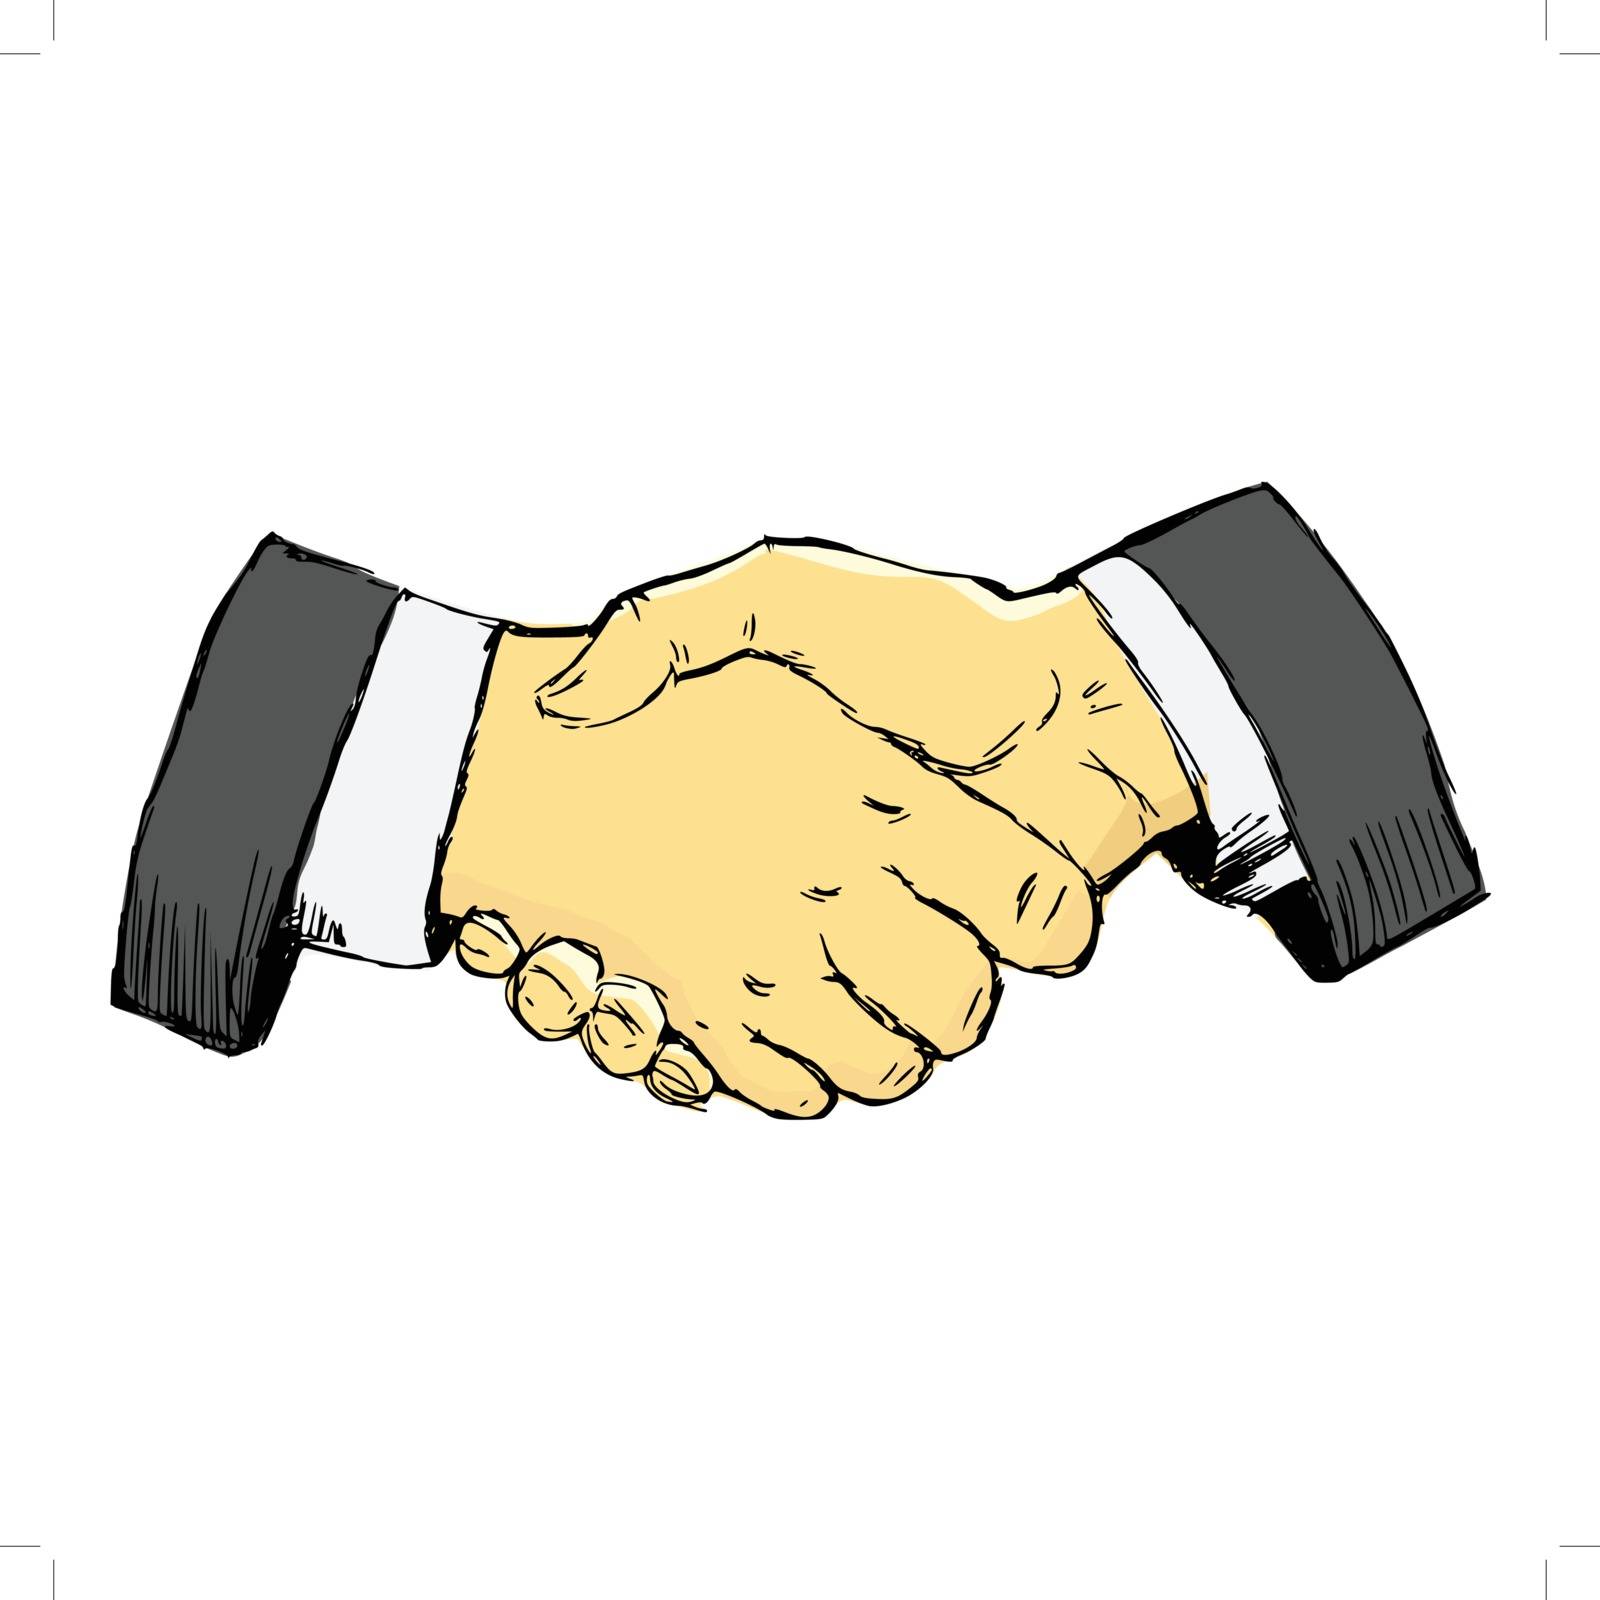 handshake by Perysty